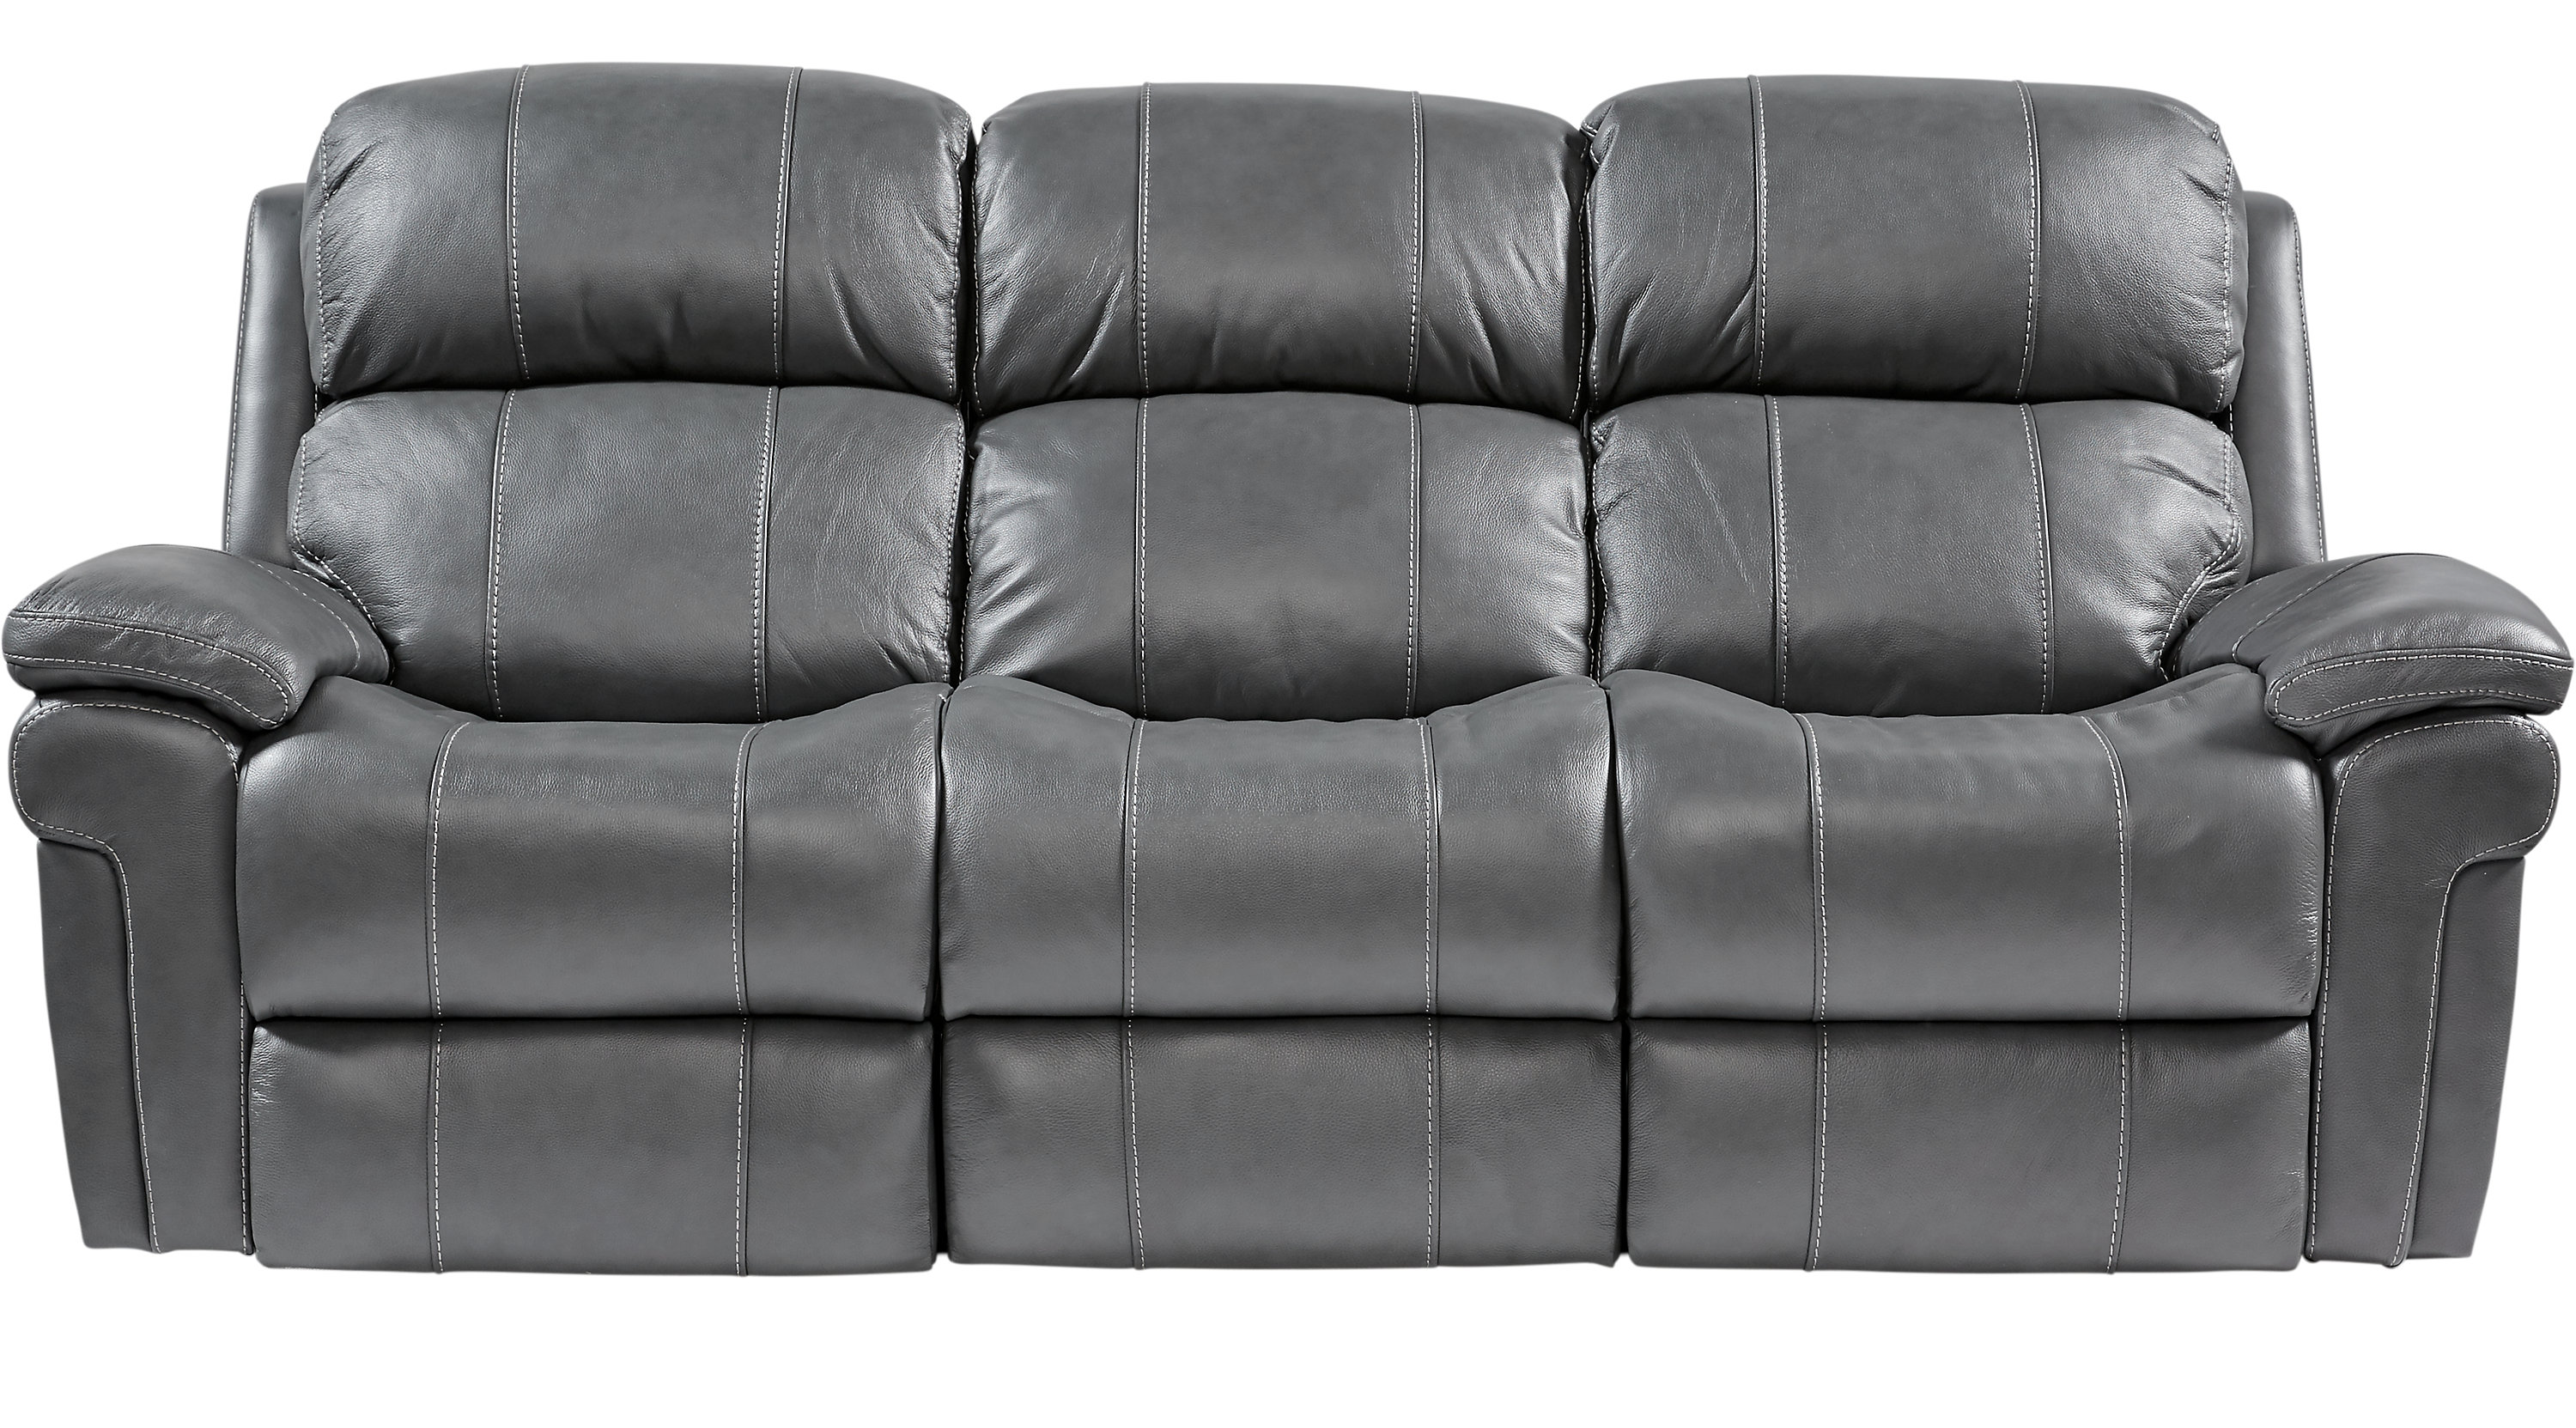 $999.99 - Trevino Smoke Leather Reclining Sofa - Contemporary,